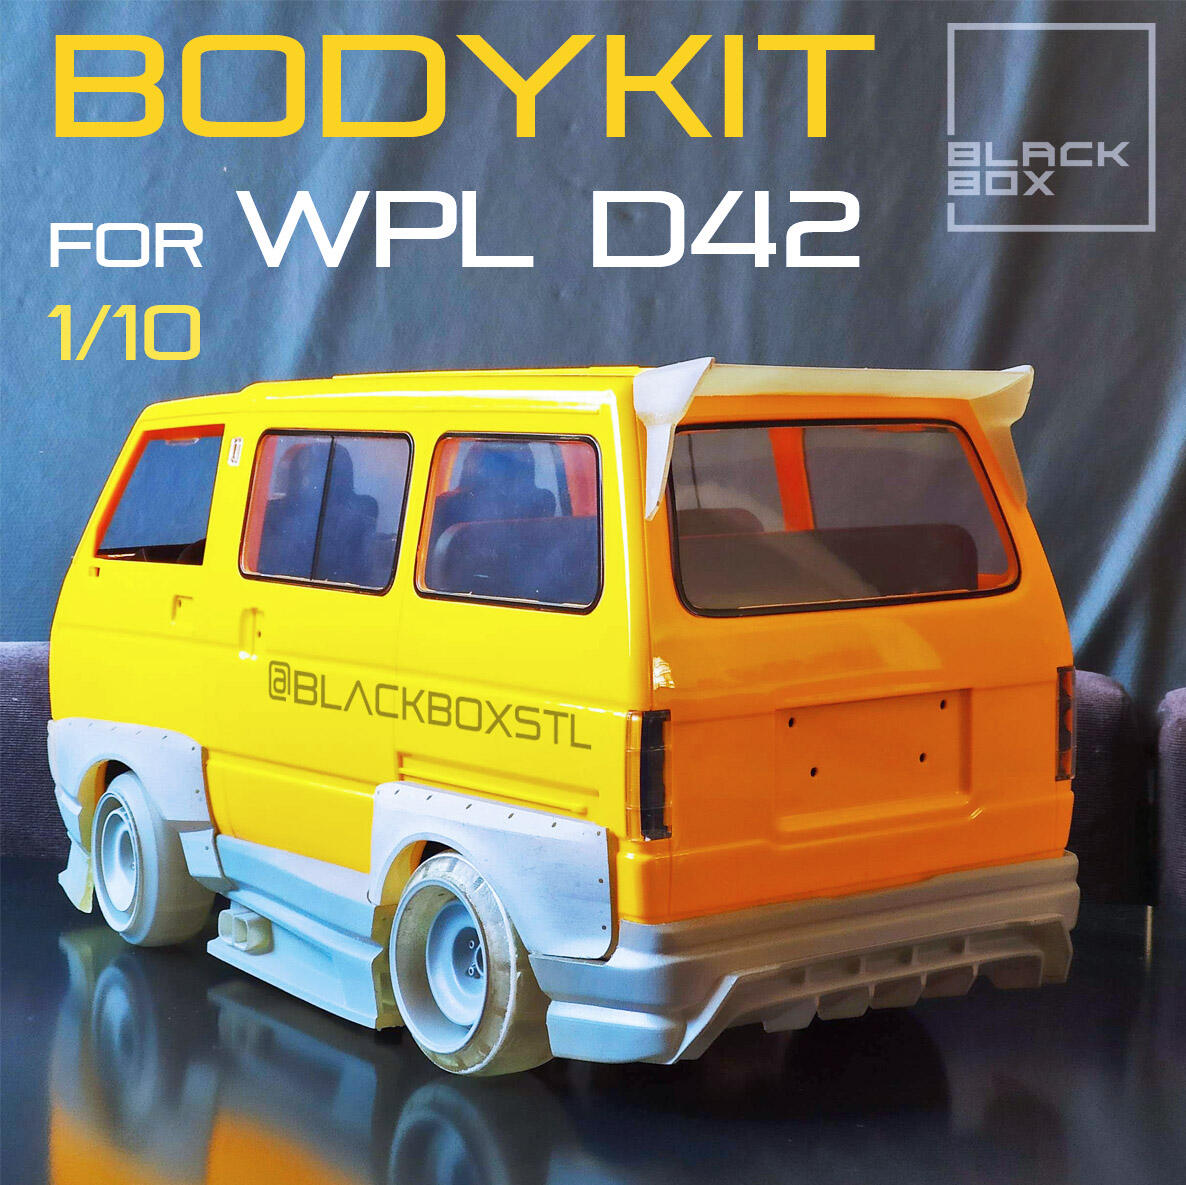 WPL D42 RC BODYKIT BY BLACKBOX 1-10TH